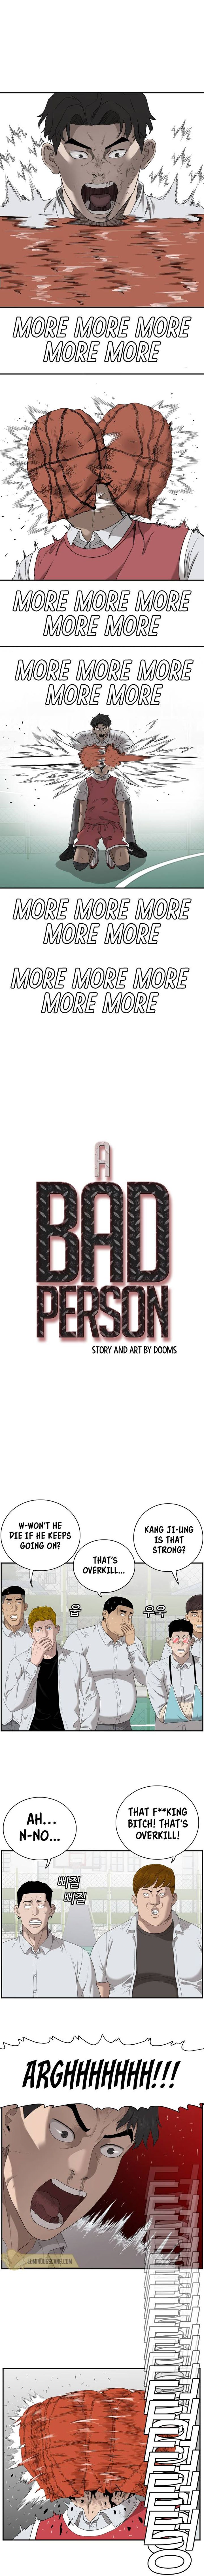 Bad Boy Dooms 50 1